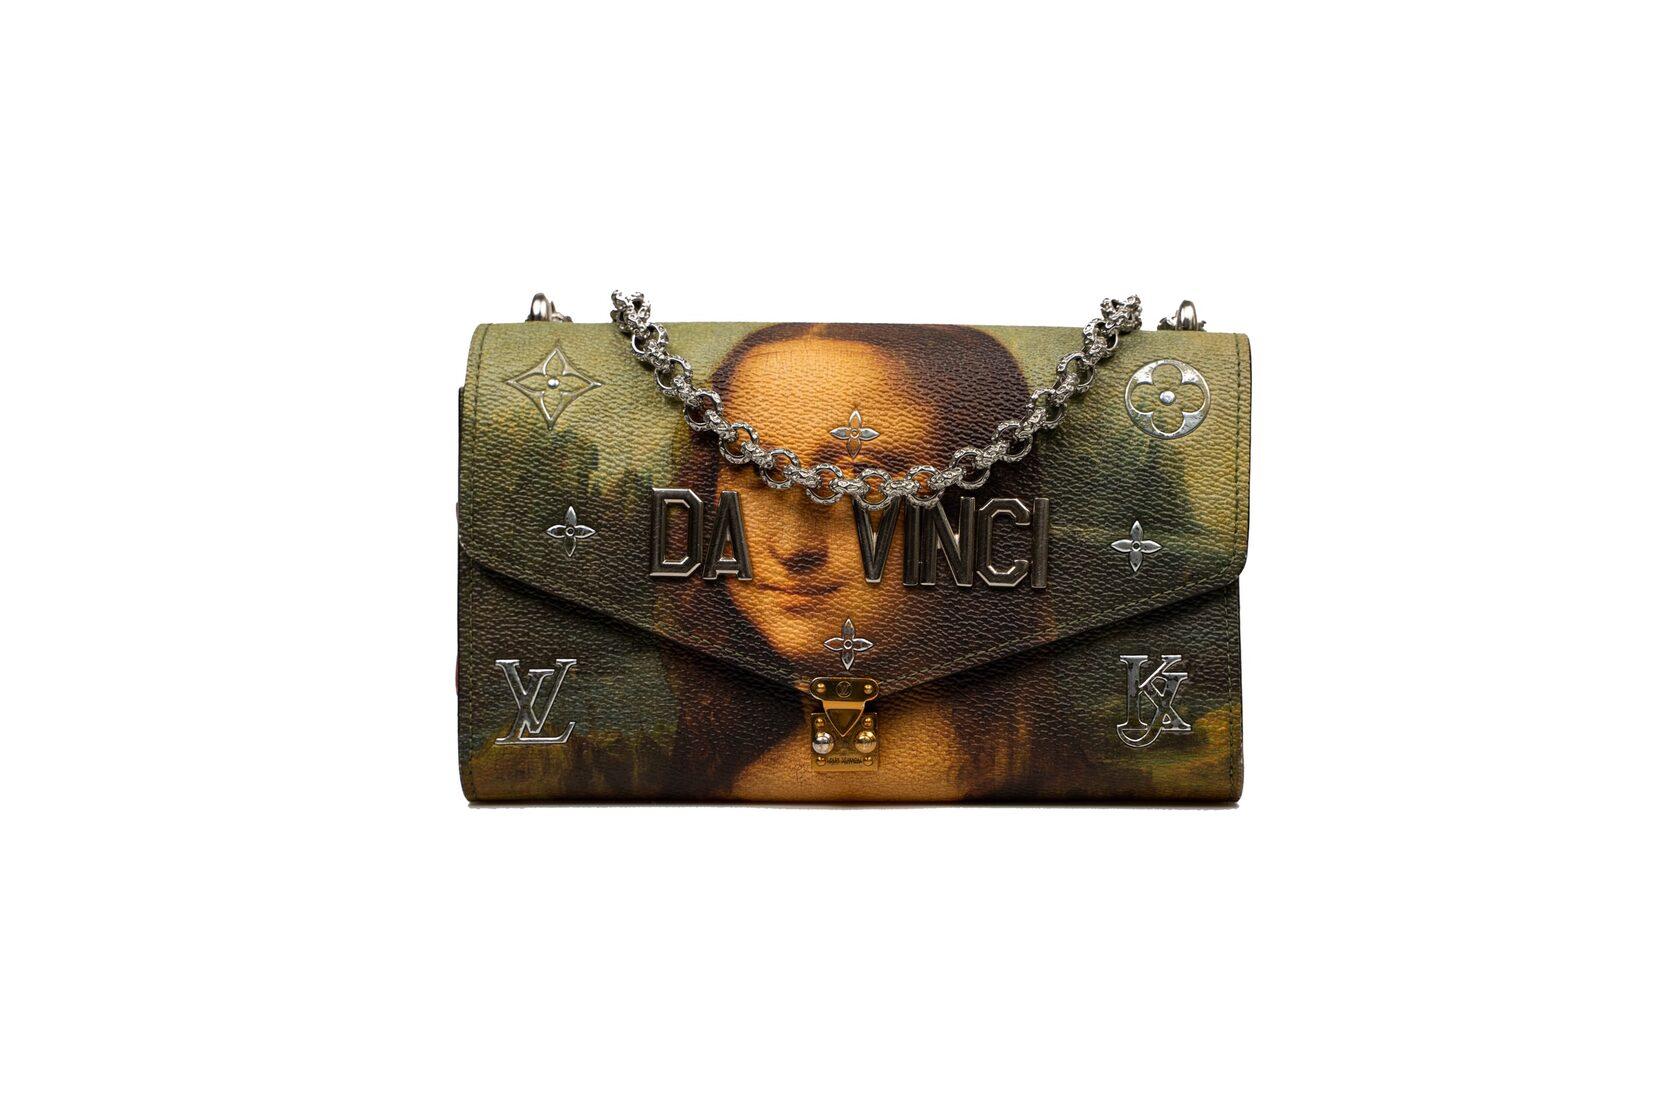 Louis Vuitton Chain Bag Limited Edition with designer Jeff Coons - Da Vinci For Sale 11